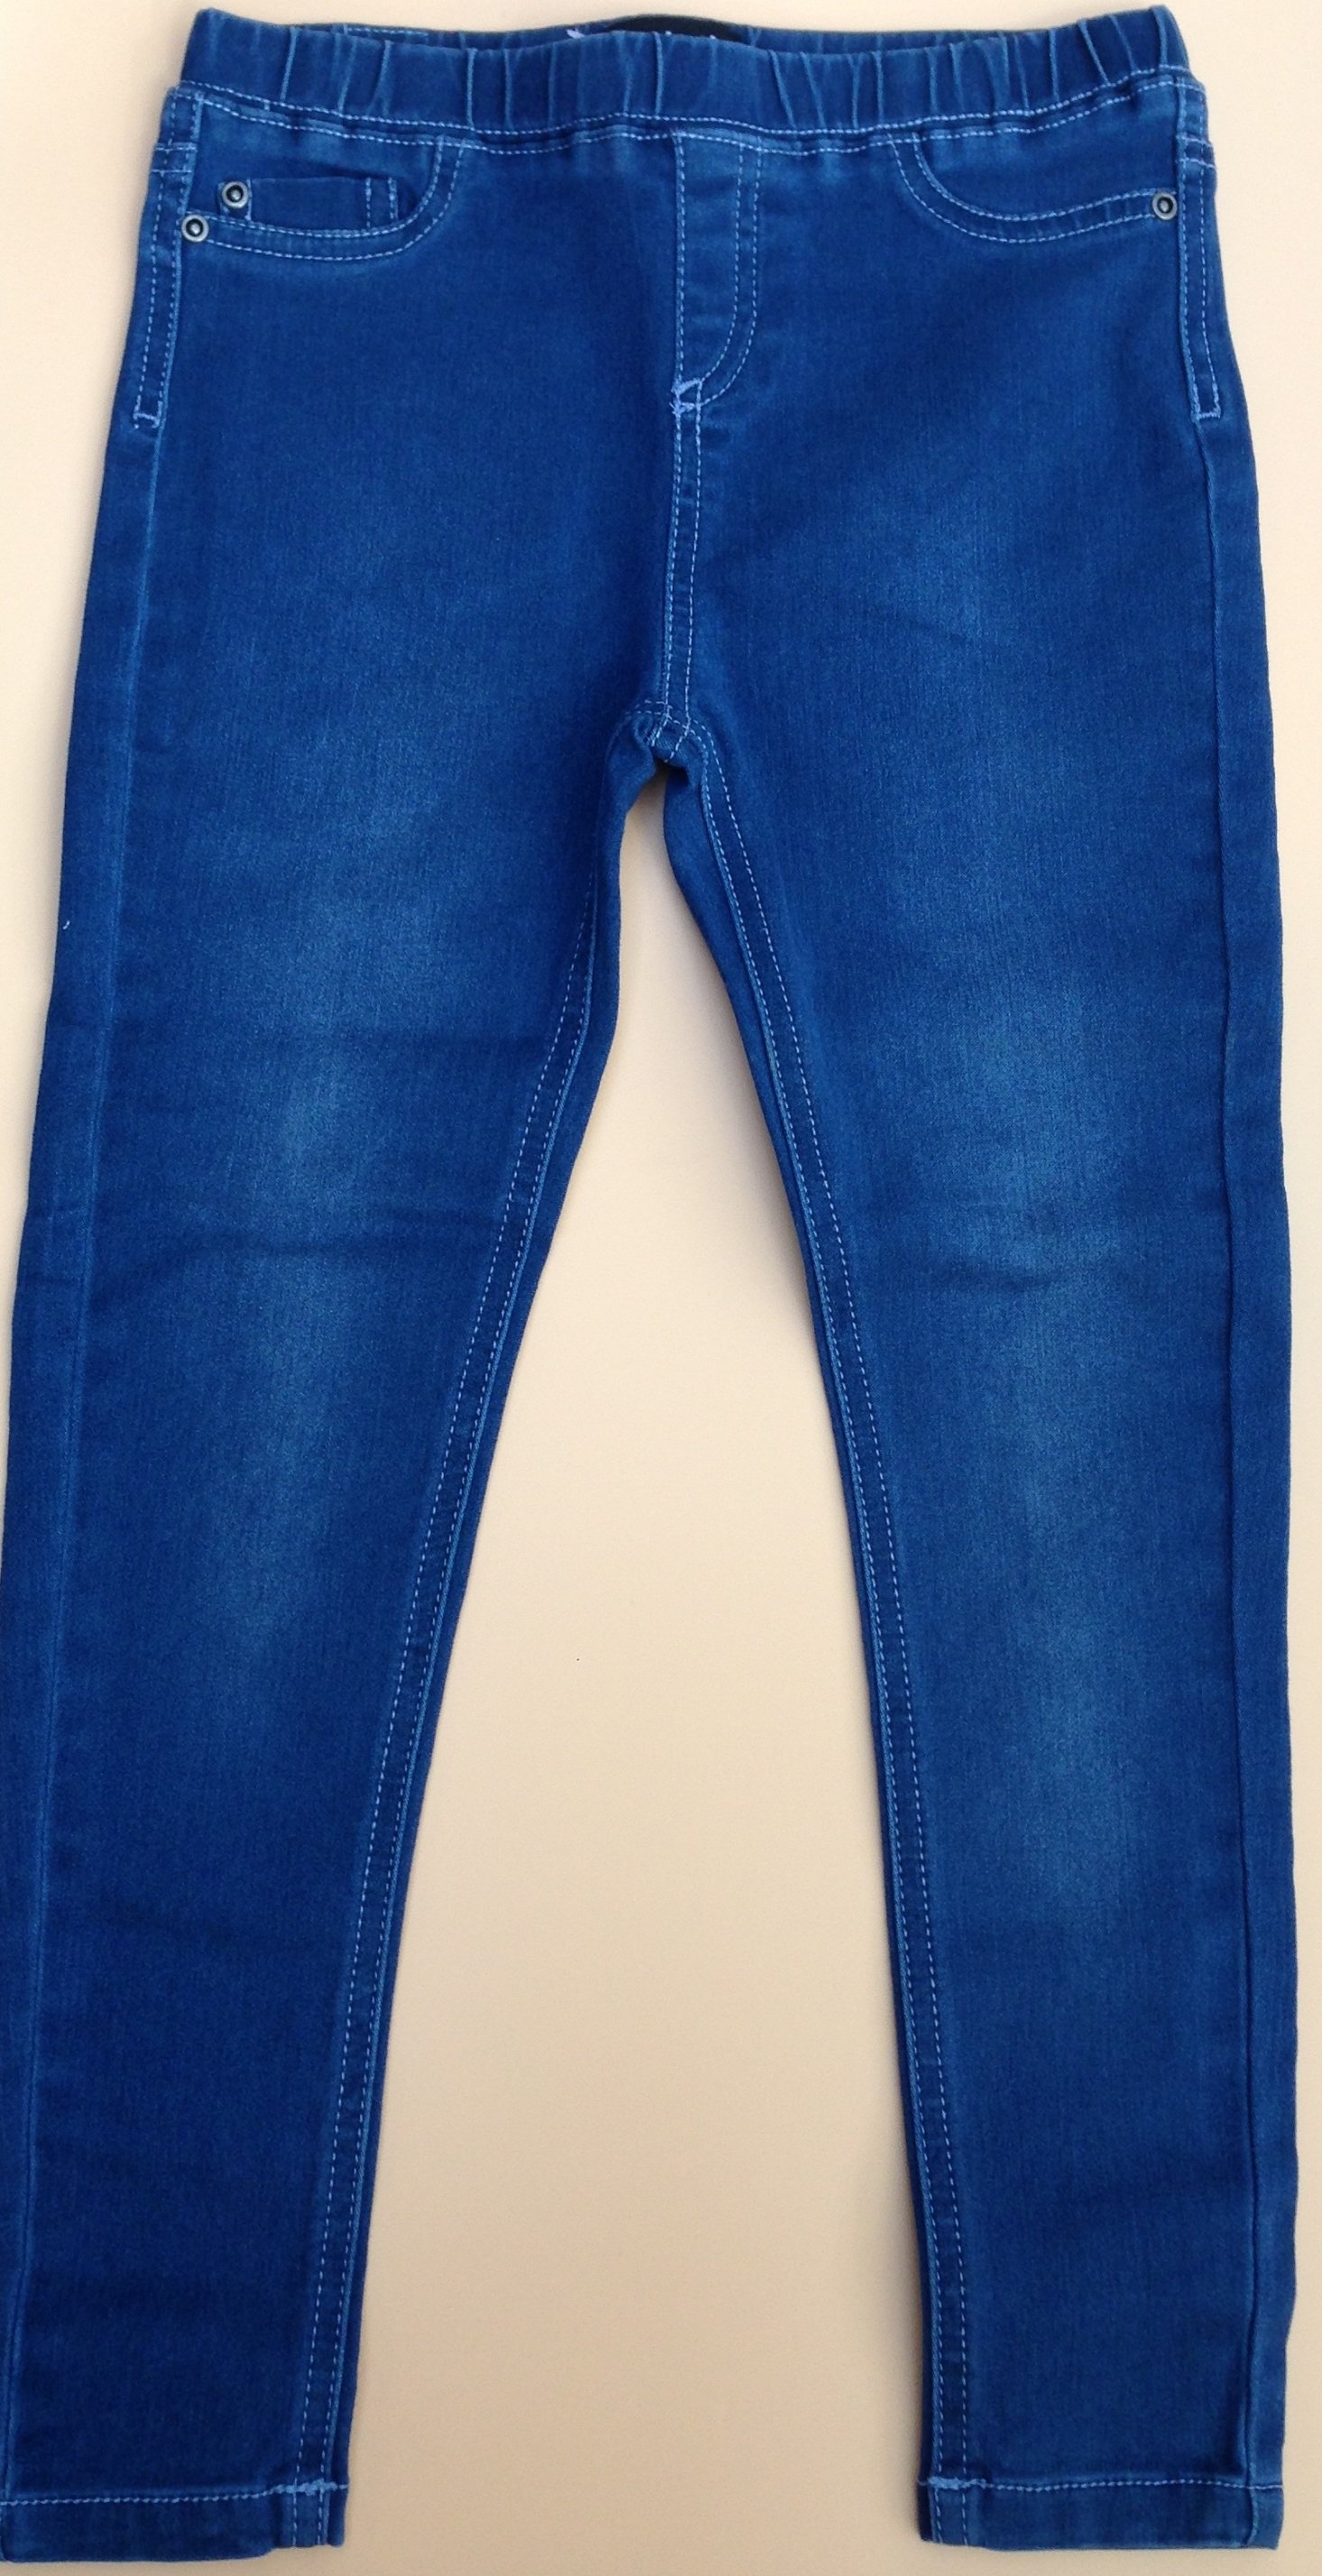 kidpik-spring-2017-denim-blue-jeans-F1